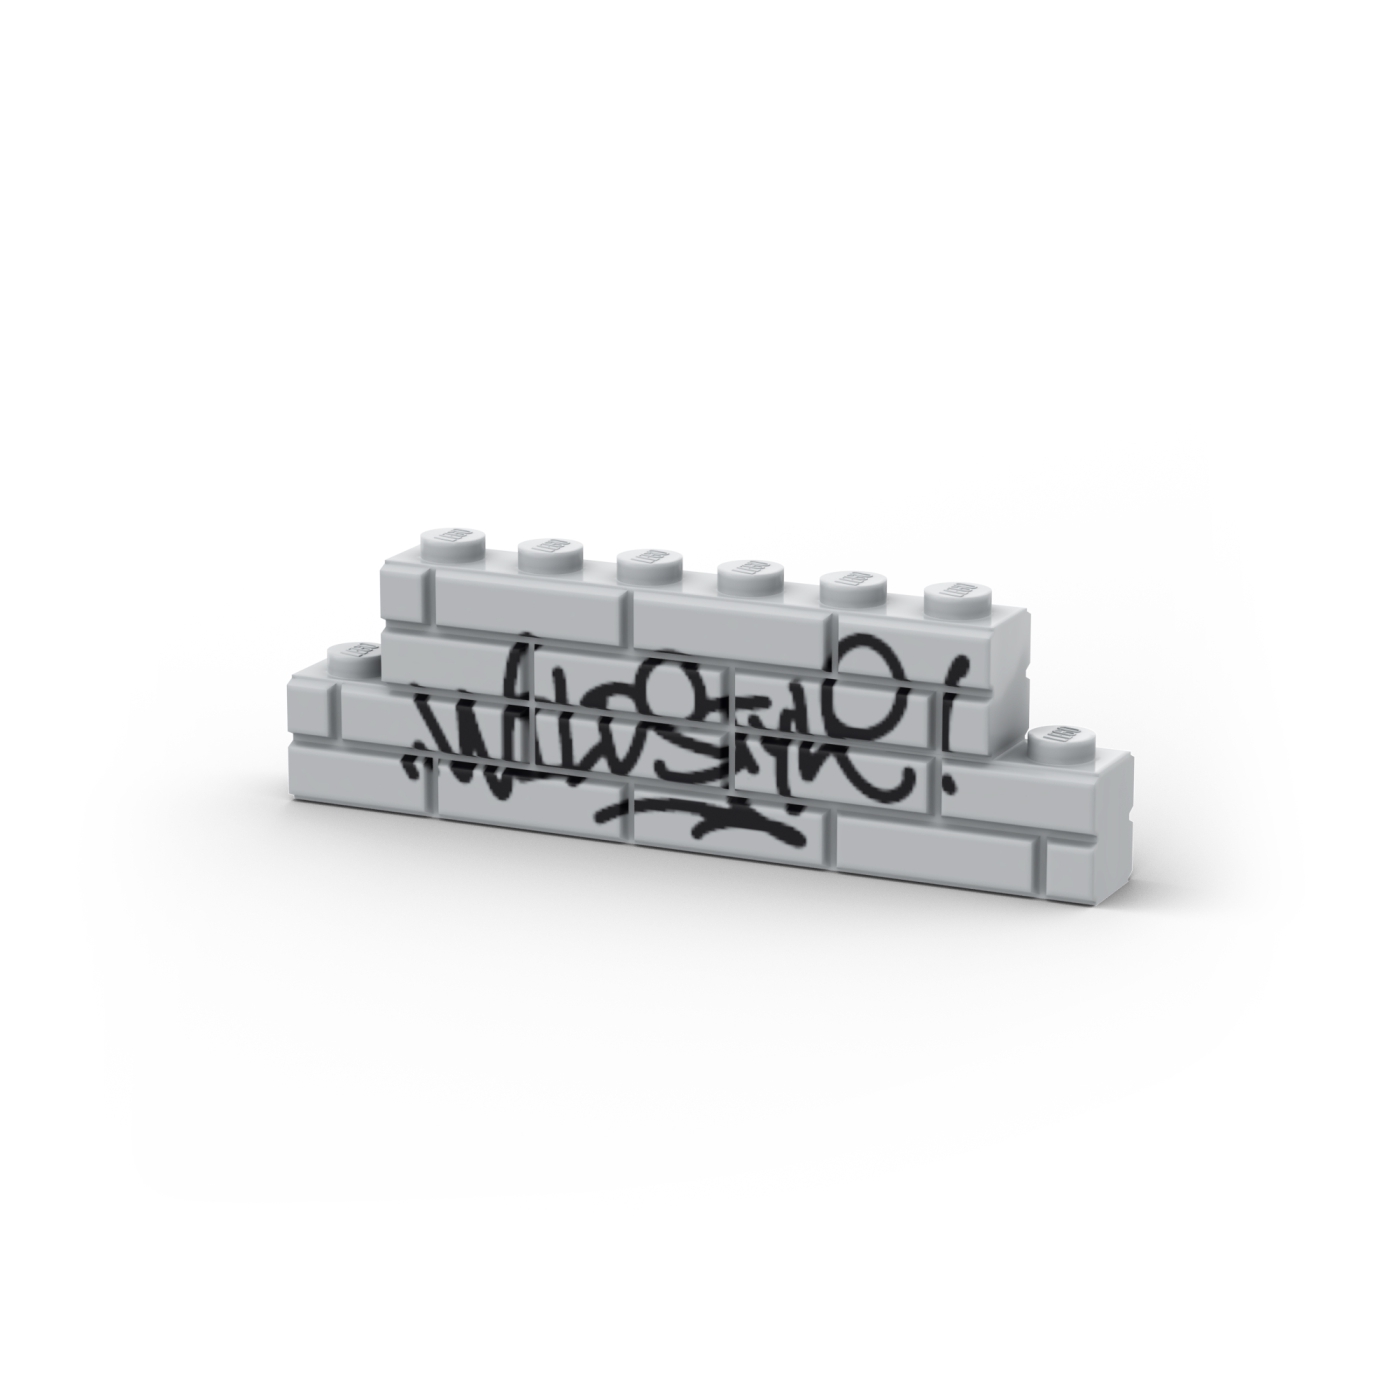 Wildstyle Graffiti Tag